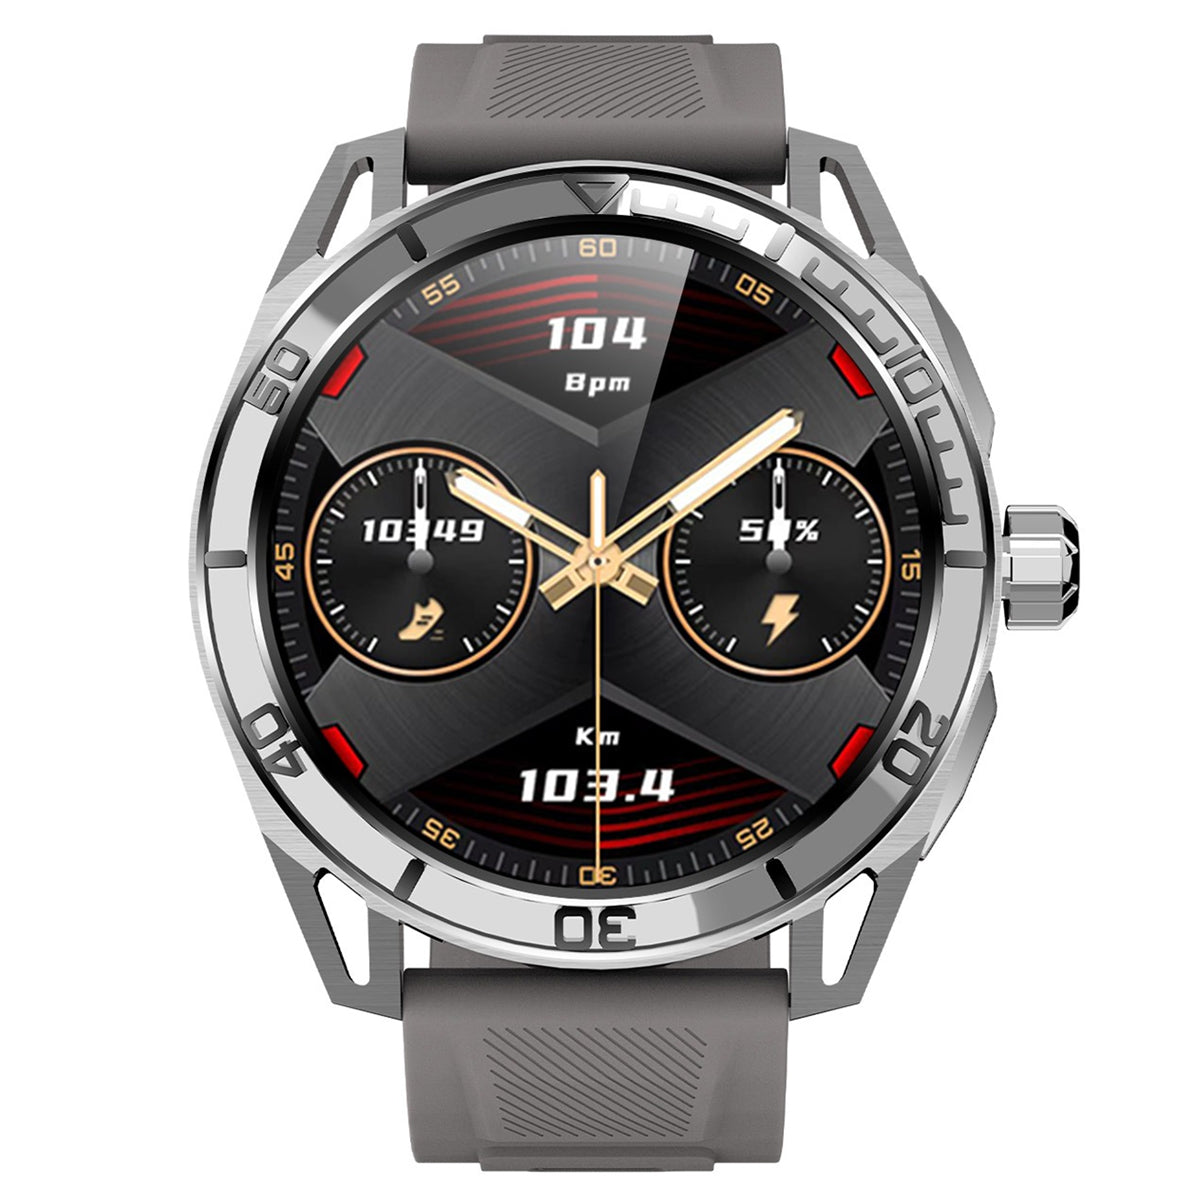 Reloj Smartwatch Sport Hd30 Full Touch Nfc 1.43´ Amoled Ips